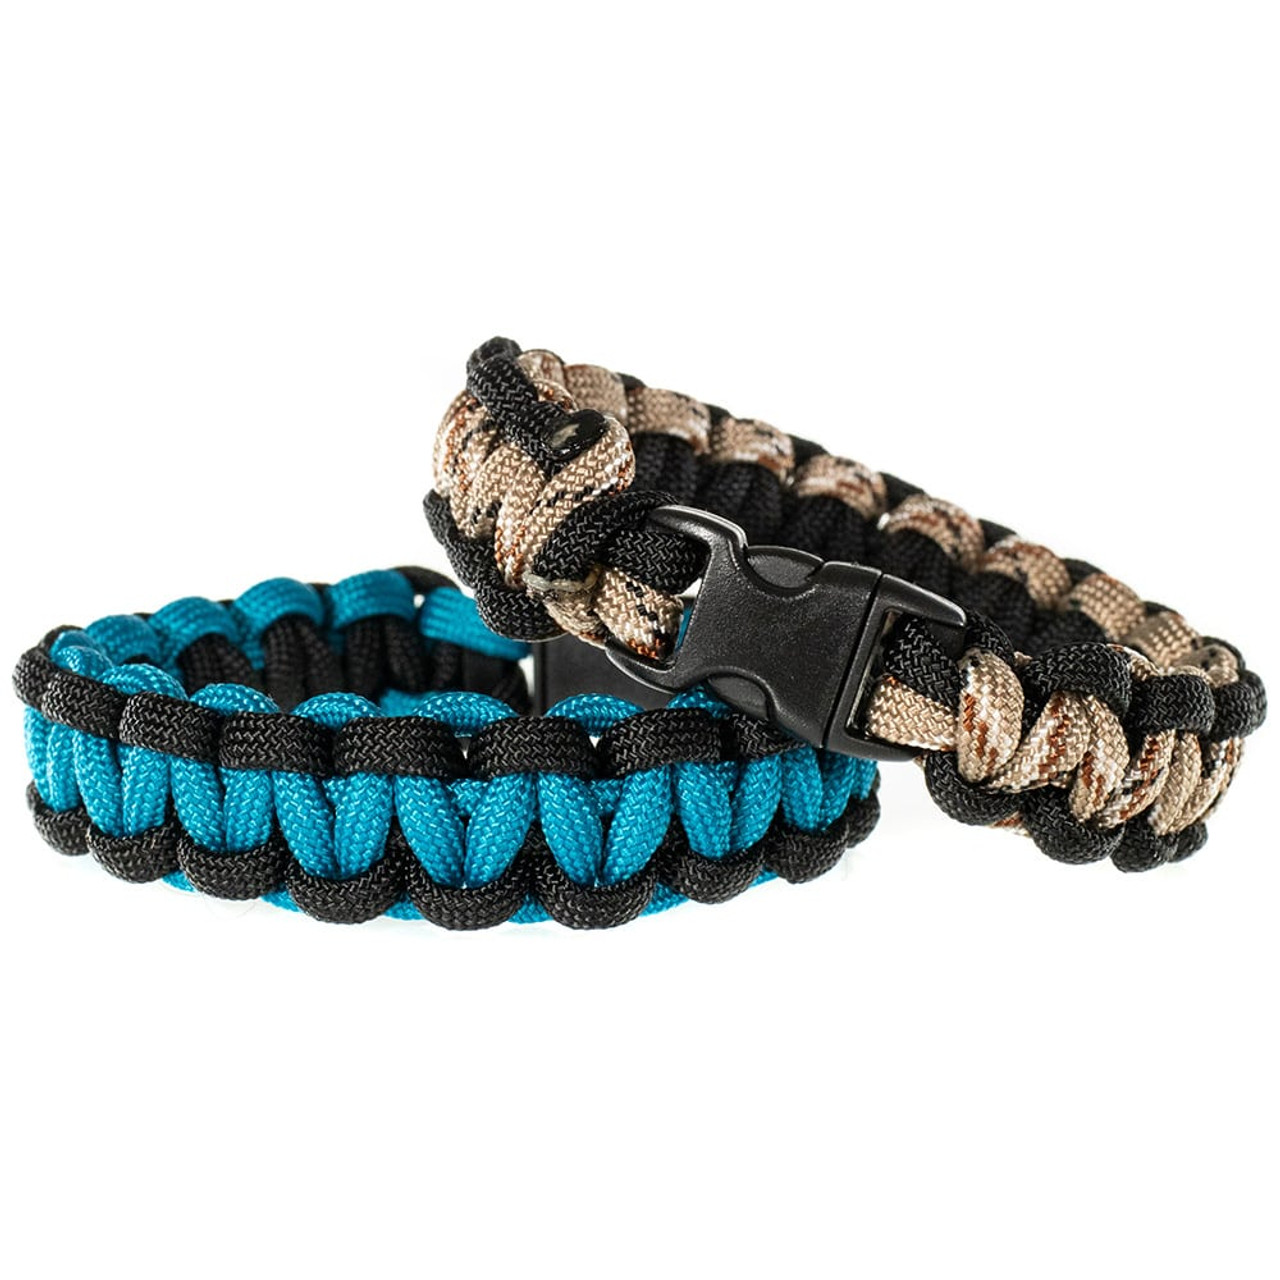 Custom Cobra Bracelets - Two Colors